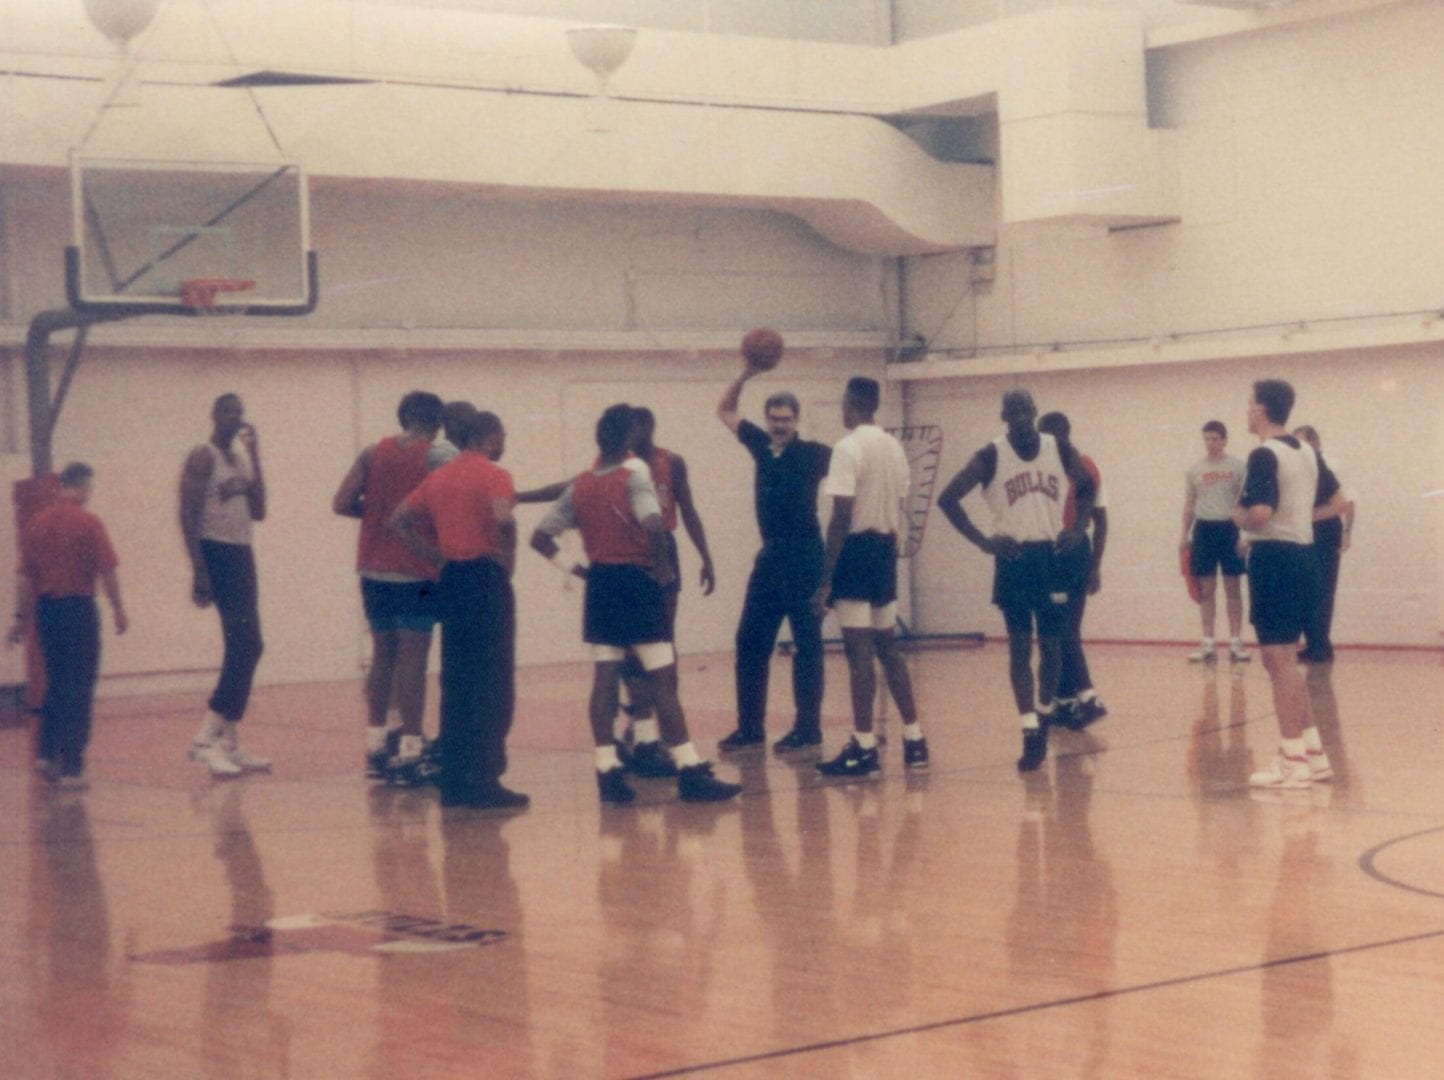 NBA players practicing